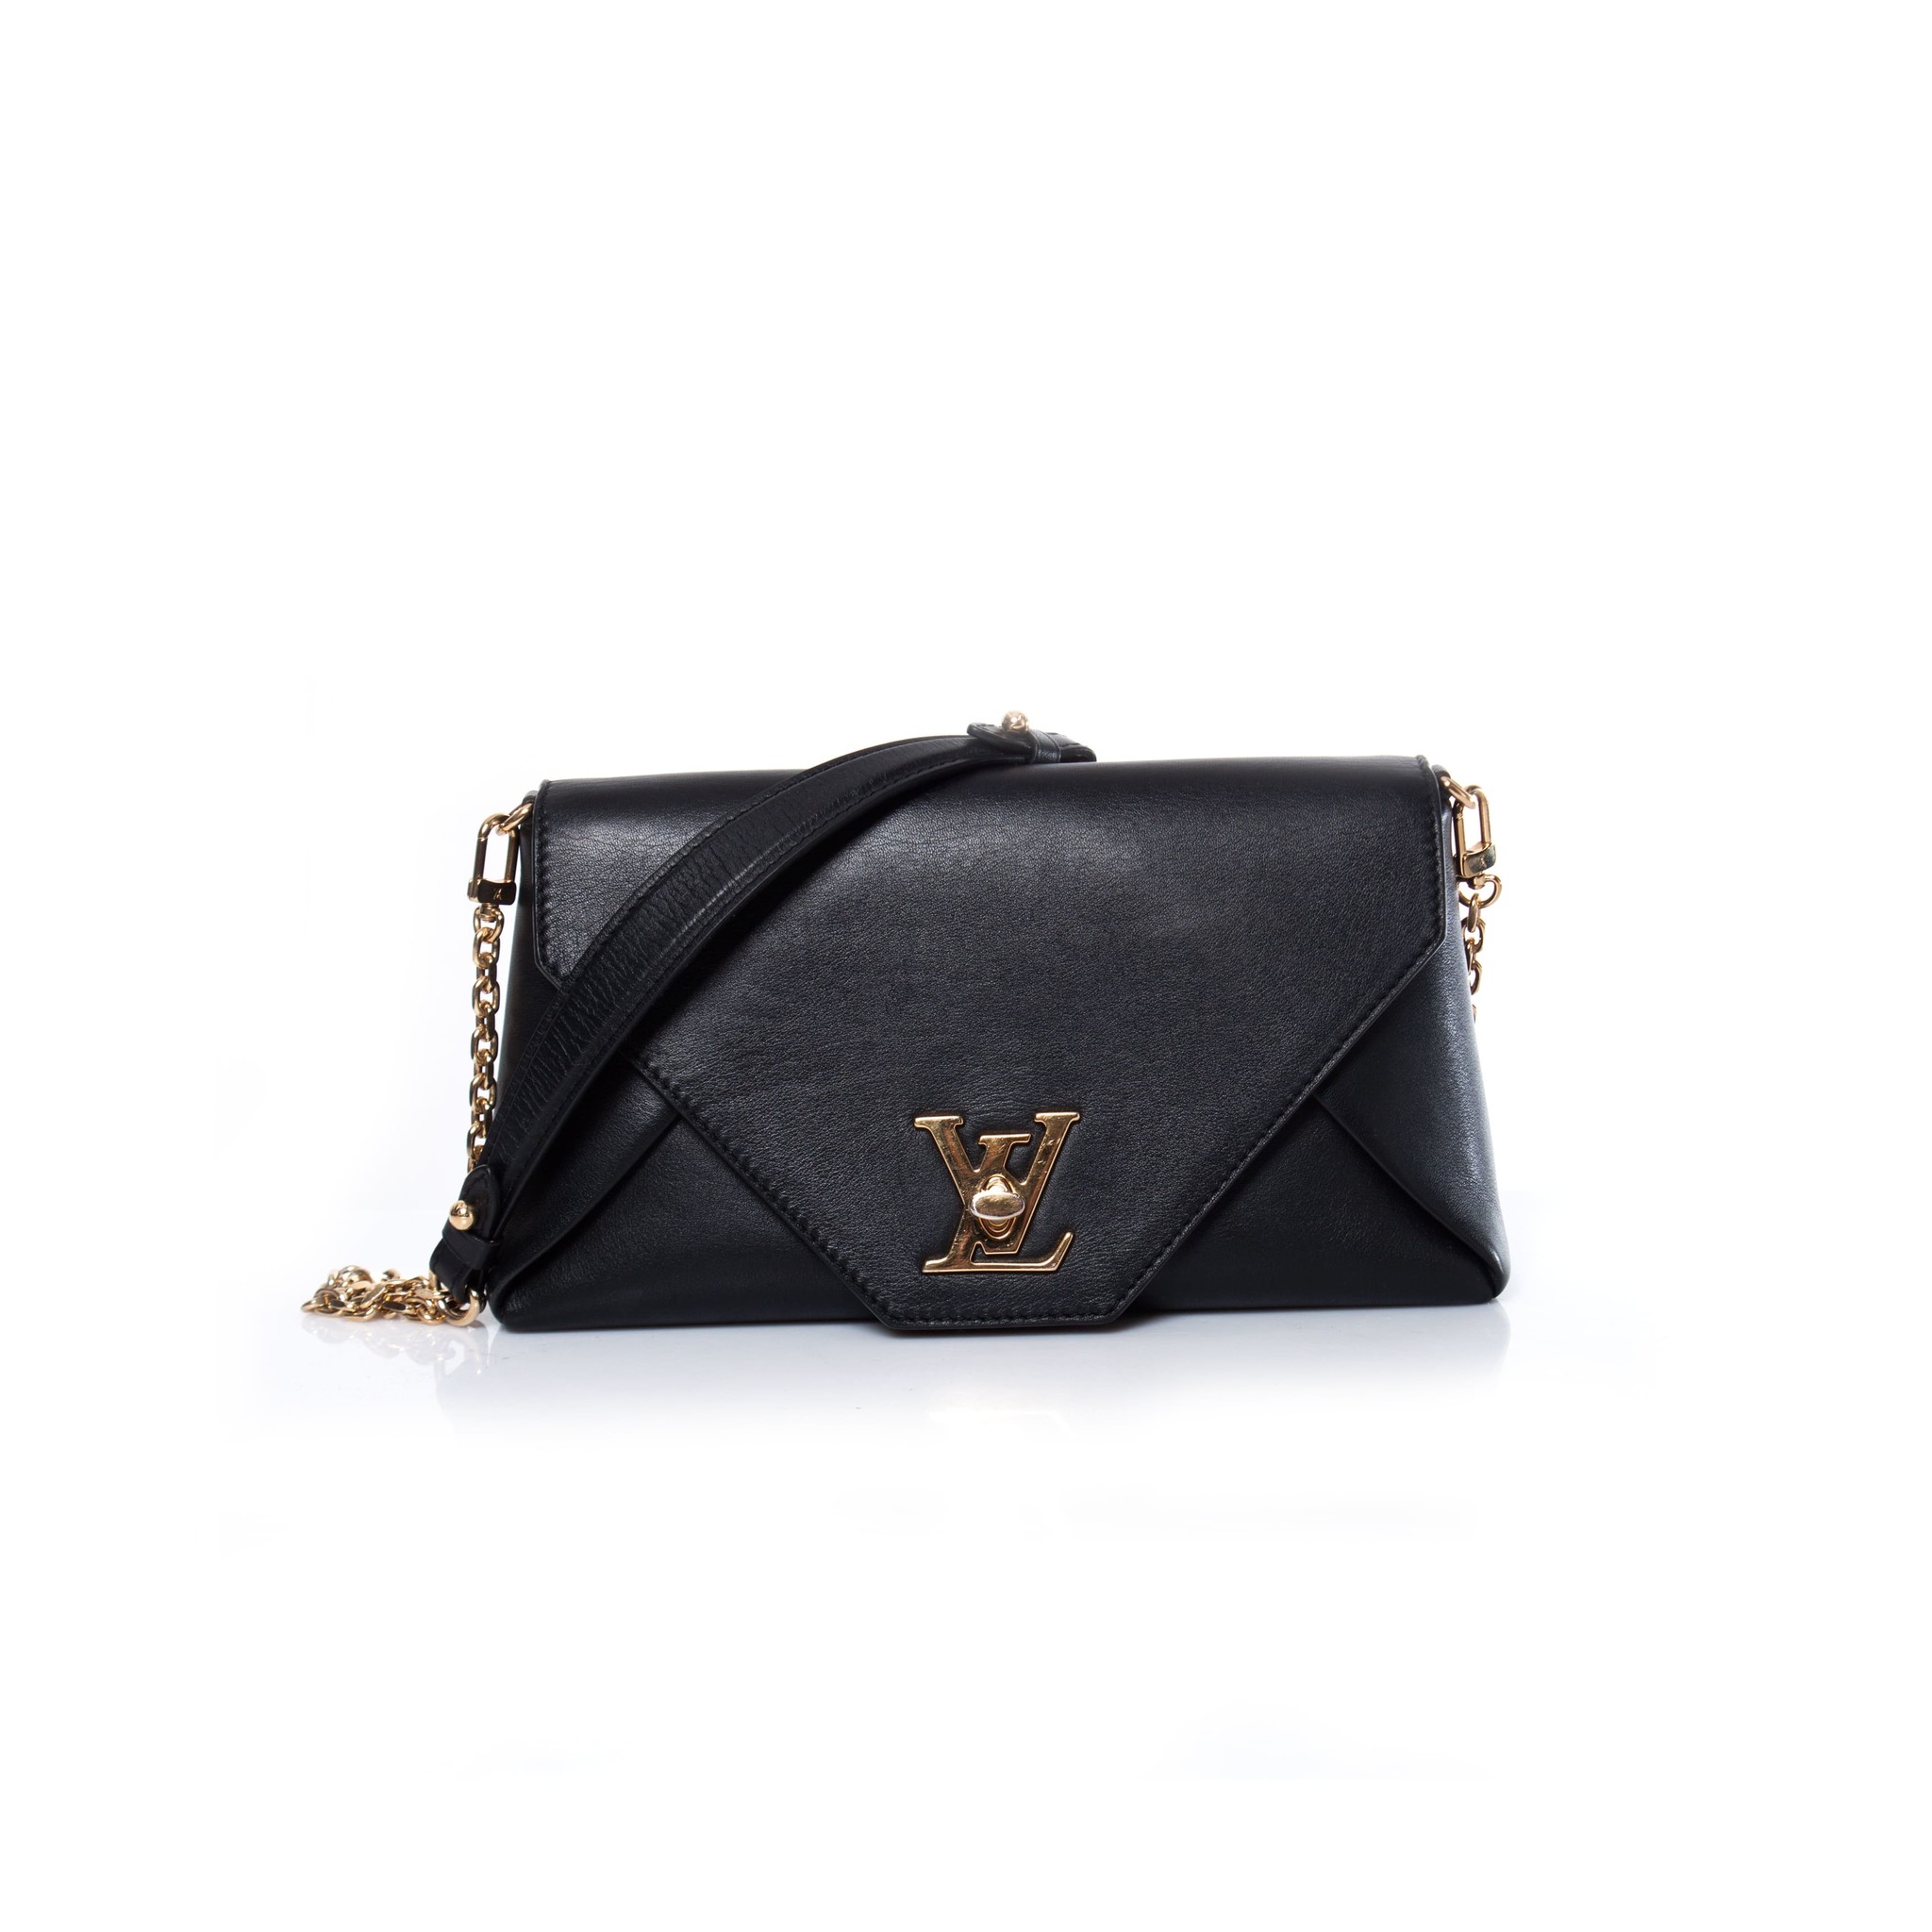 Louis Vuitton Love Note Bag